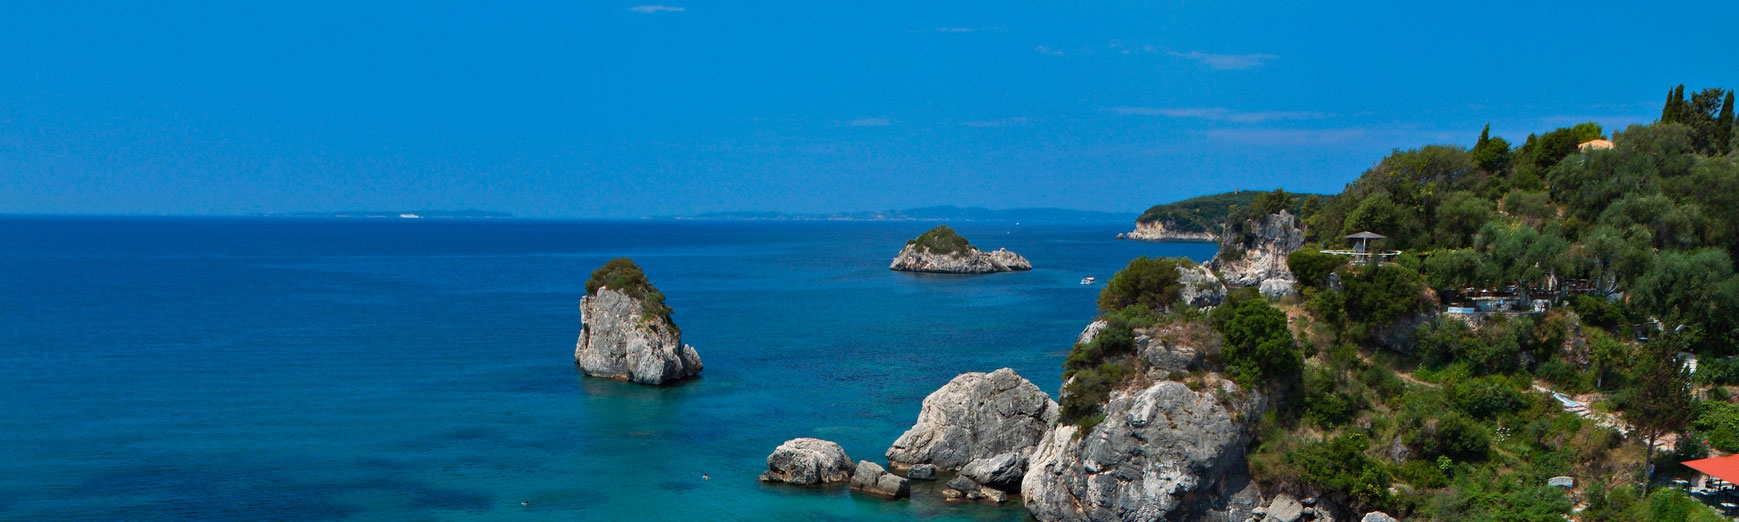 Igoumenitsa, Grecia, veduta panoramica costa Syvota